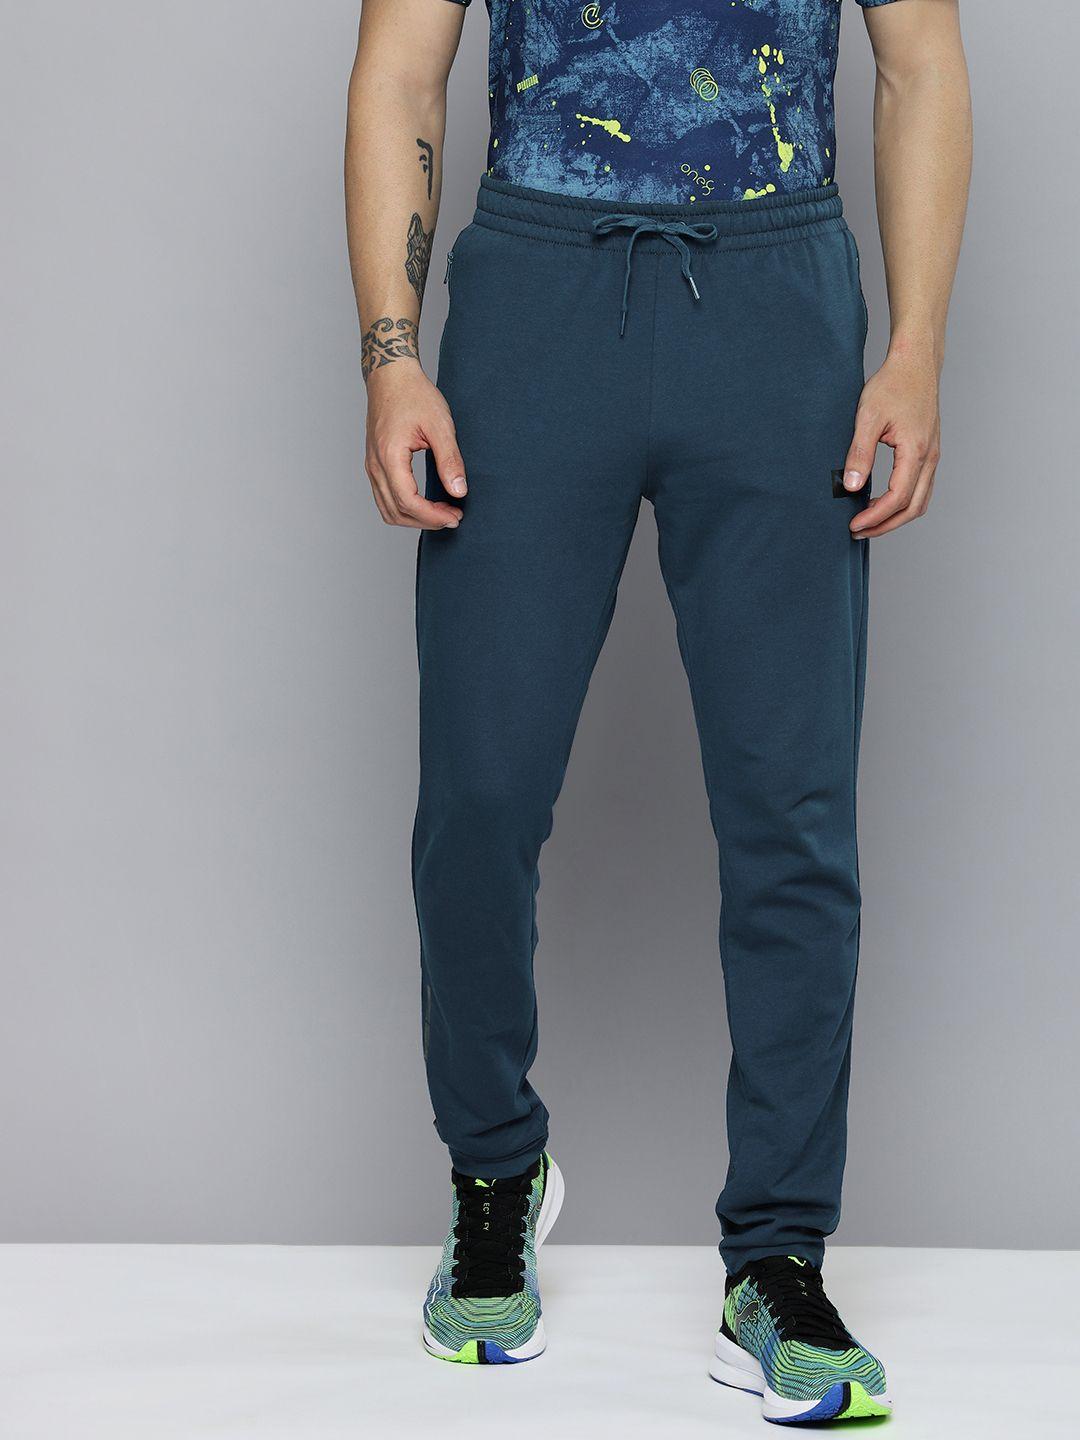 one8 x puma men teal blue brand logo printed slim fit regular track pants